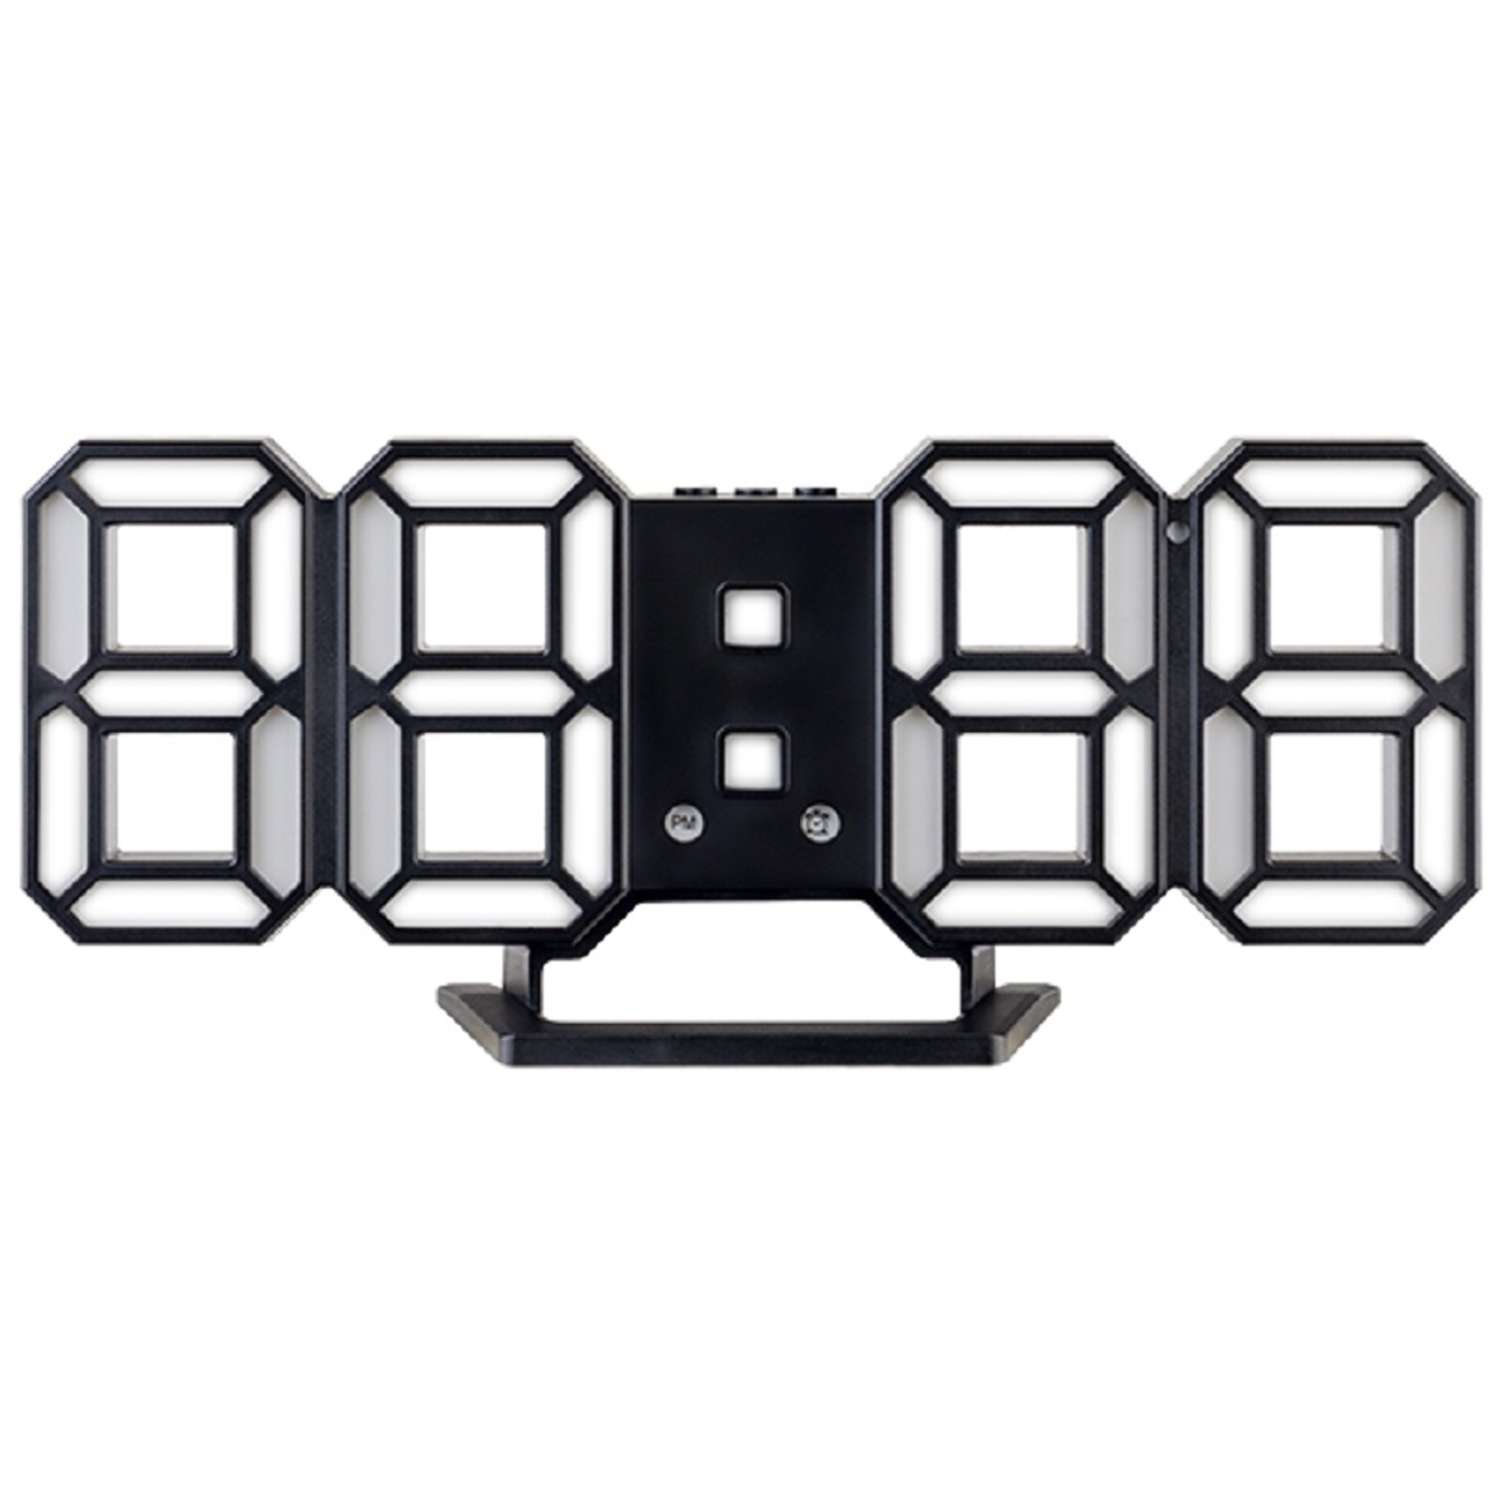 LED часы-будильник Perfeo LUMINOUS 2 черный корпус белая подсветка PF-6111 - фото 2